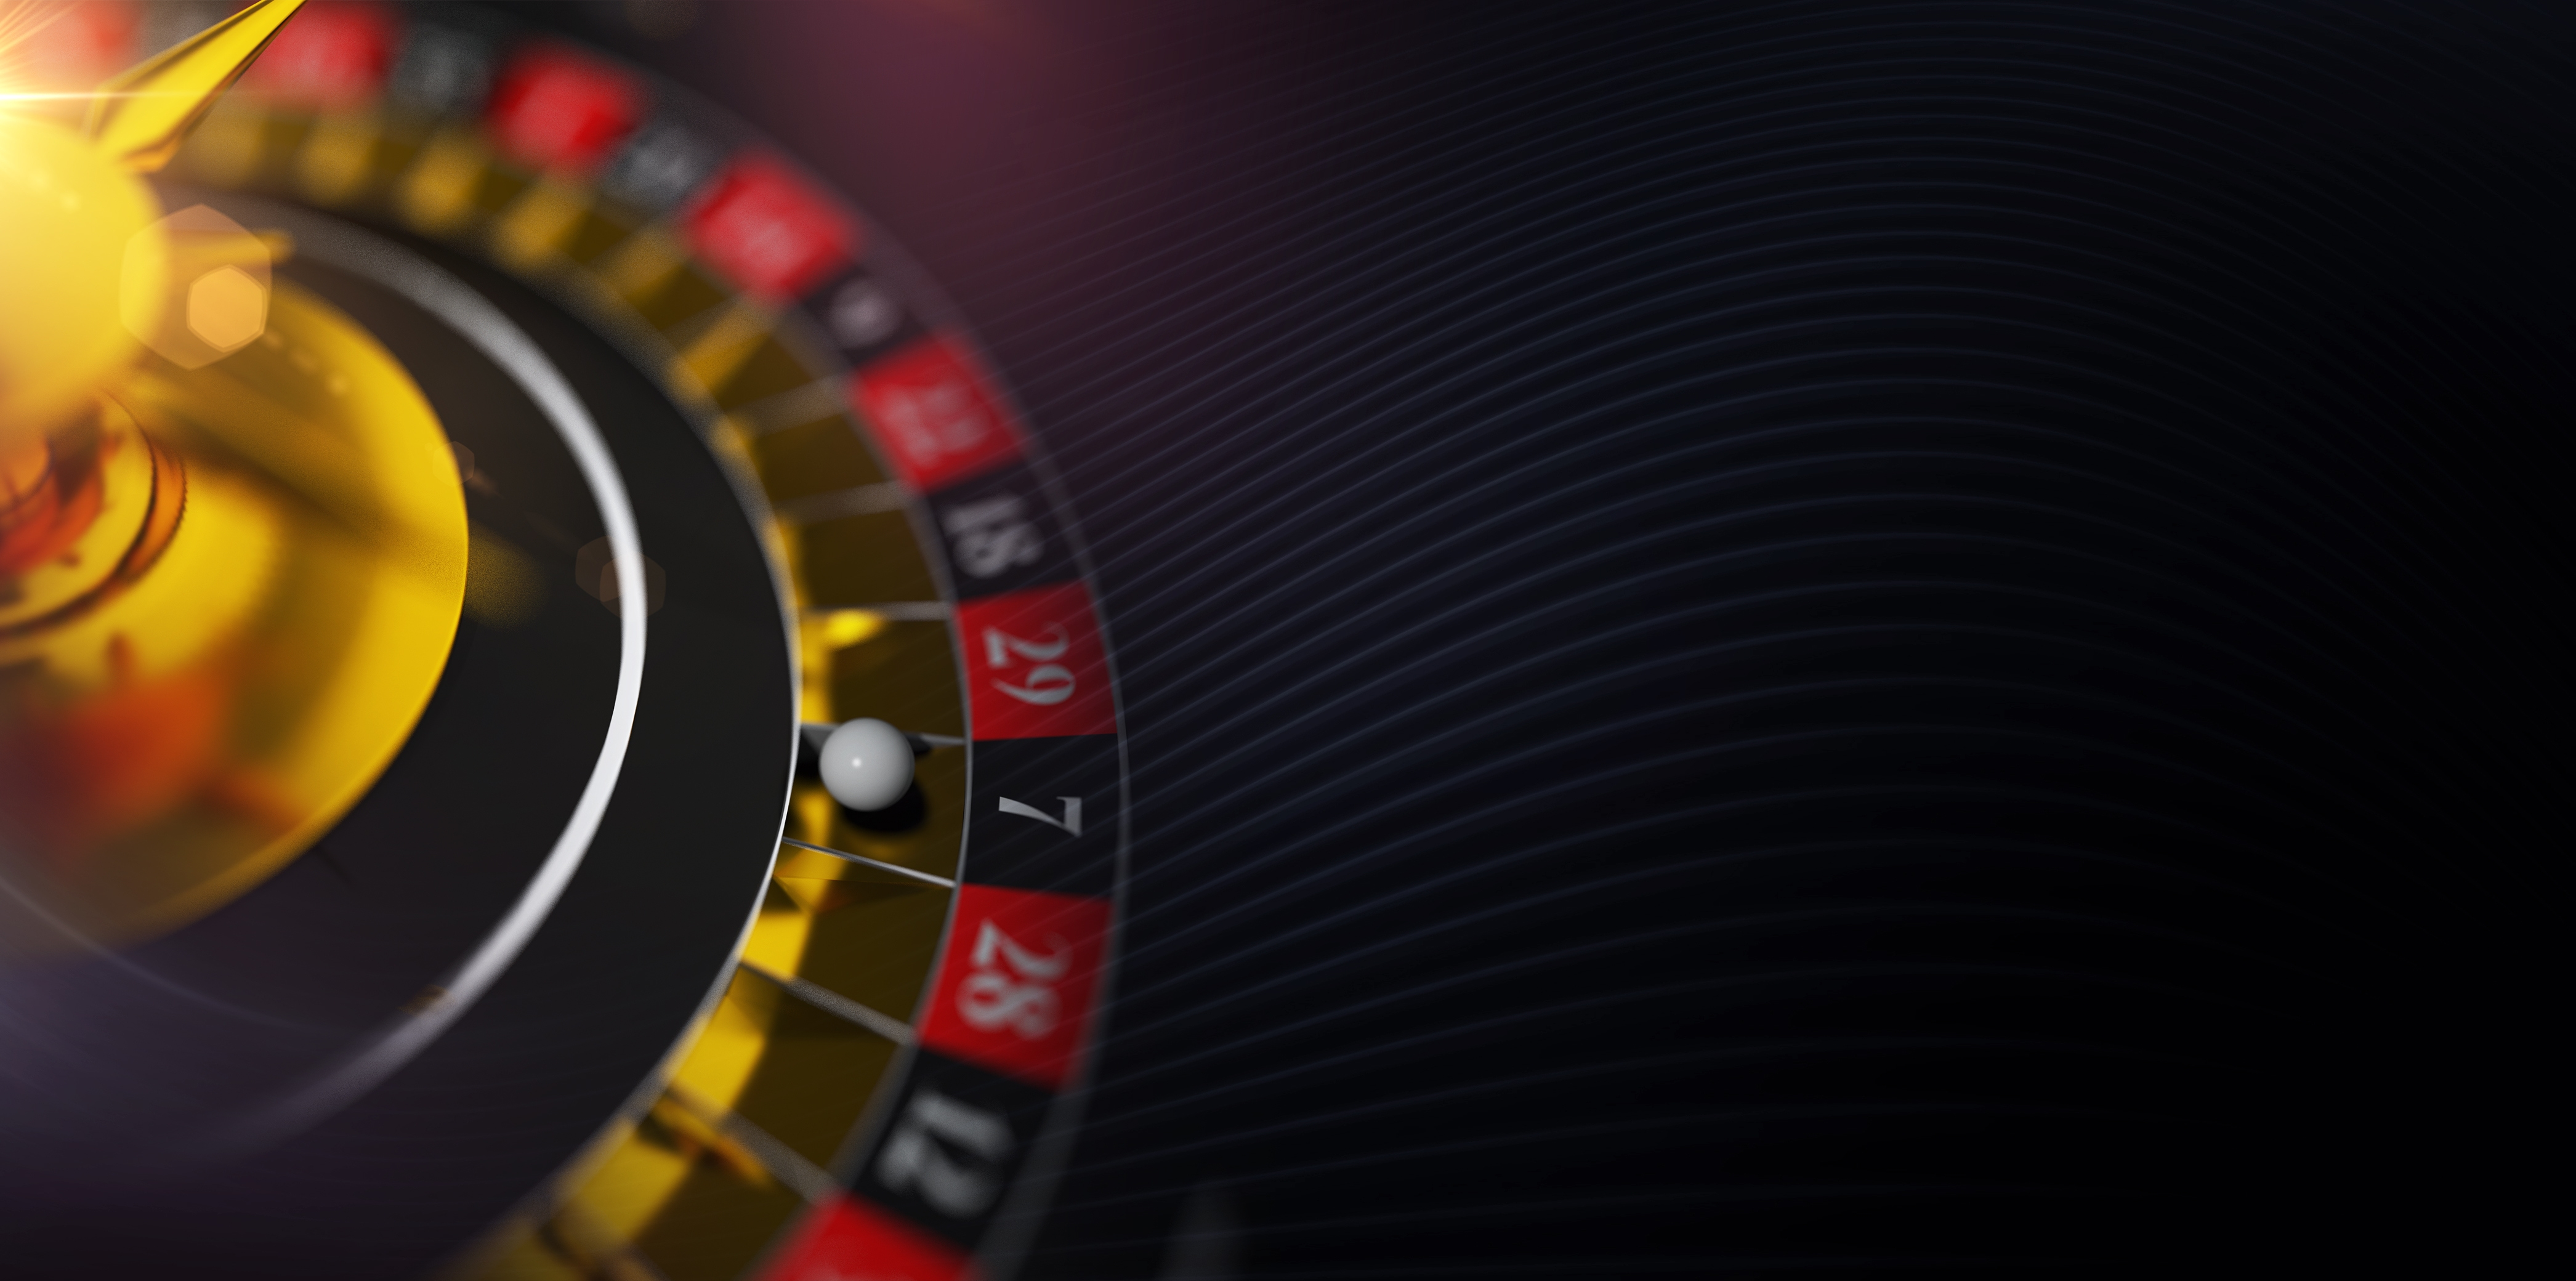 Benefits of legalizing casino gambling